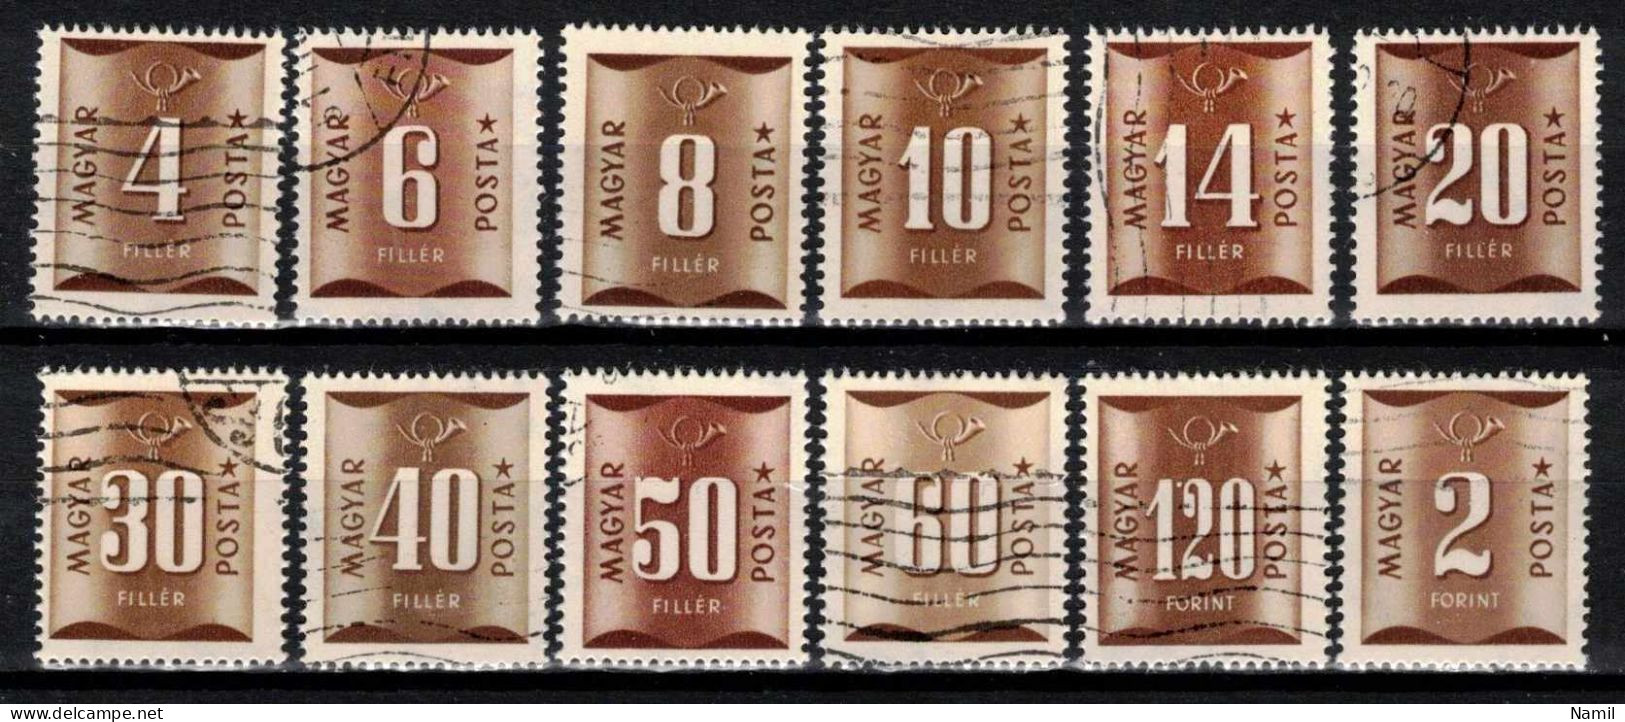 Hongrie 1951 Mi P 191-202 (Yv TT 185-96), Obliteré - Port Dû (Taxe)